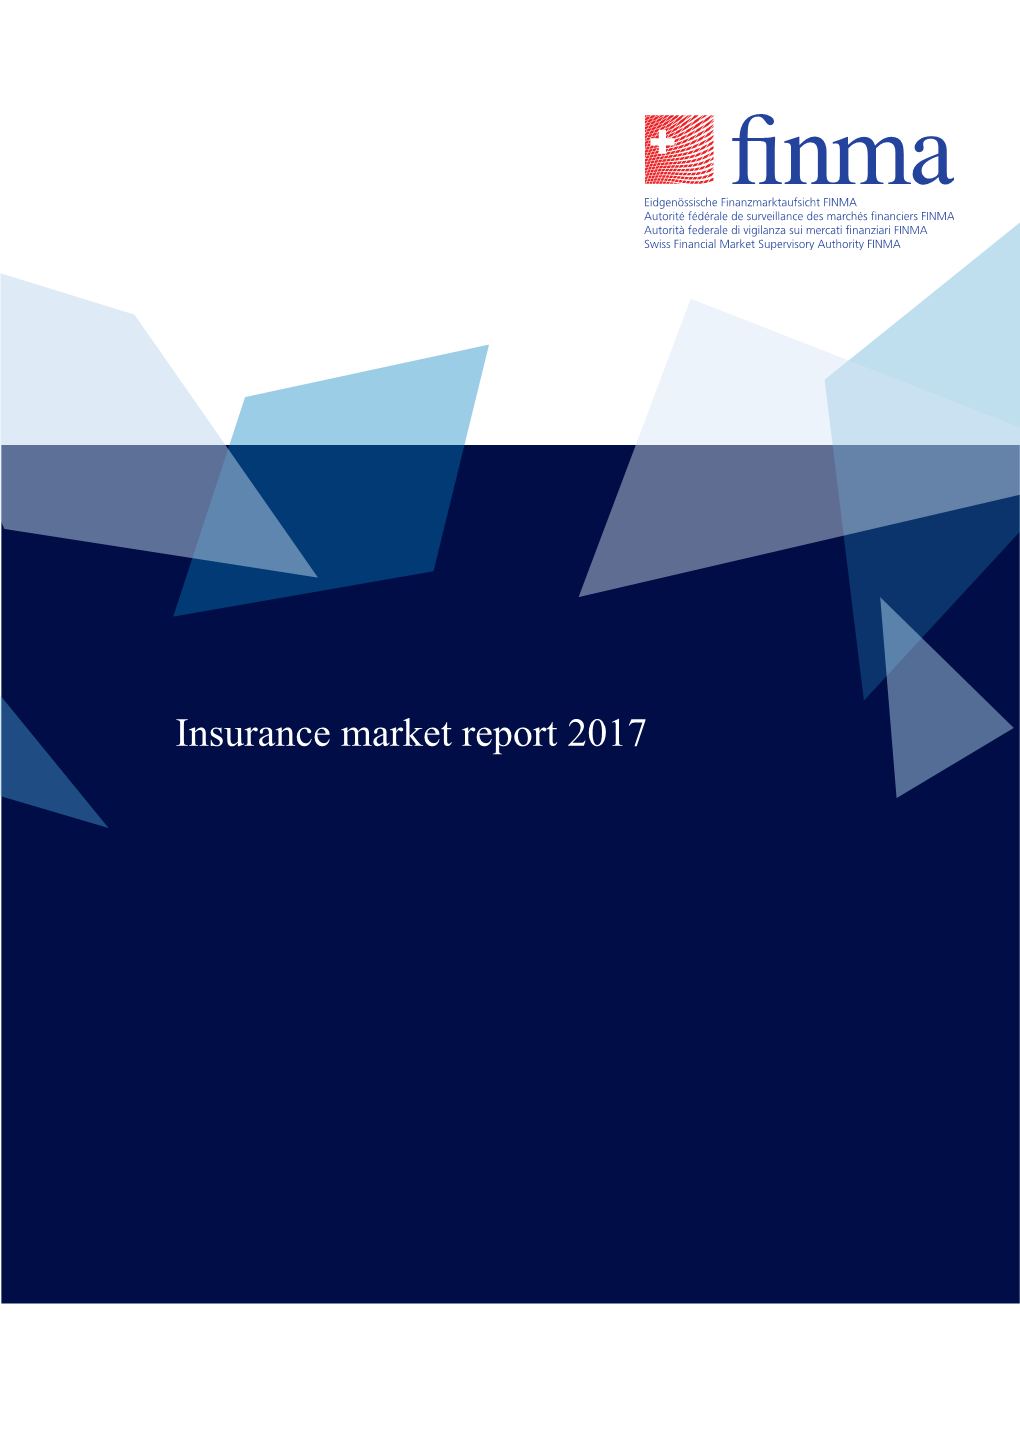 Insurance Market Report 2017 Foreword